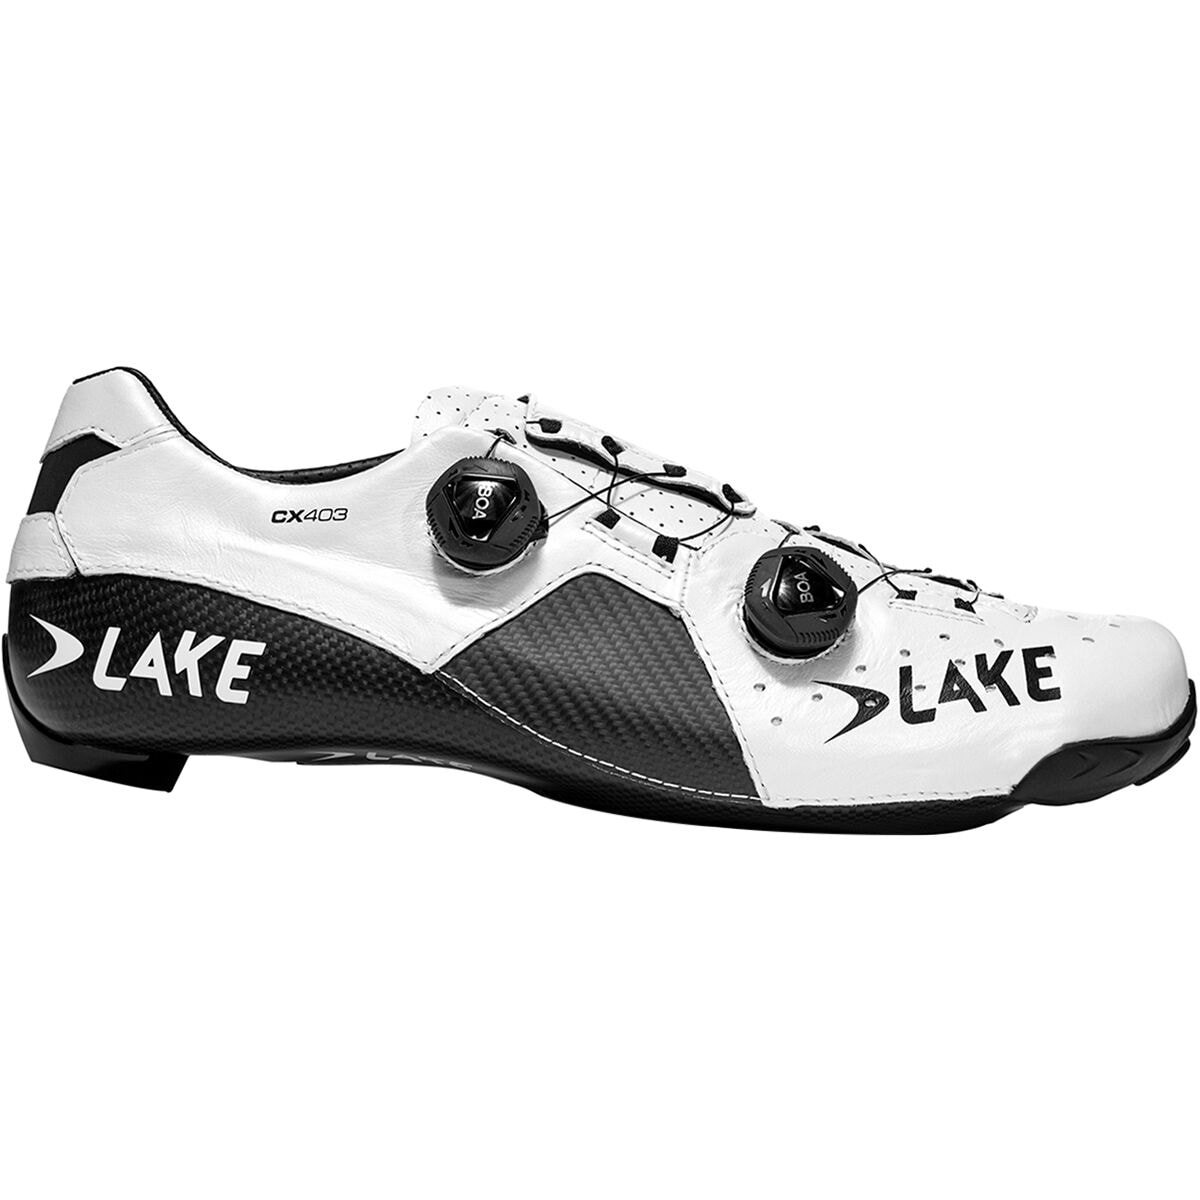 Lake CX403 Speedplay Cycling...